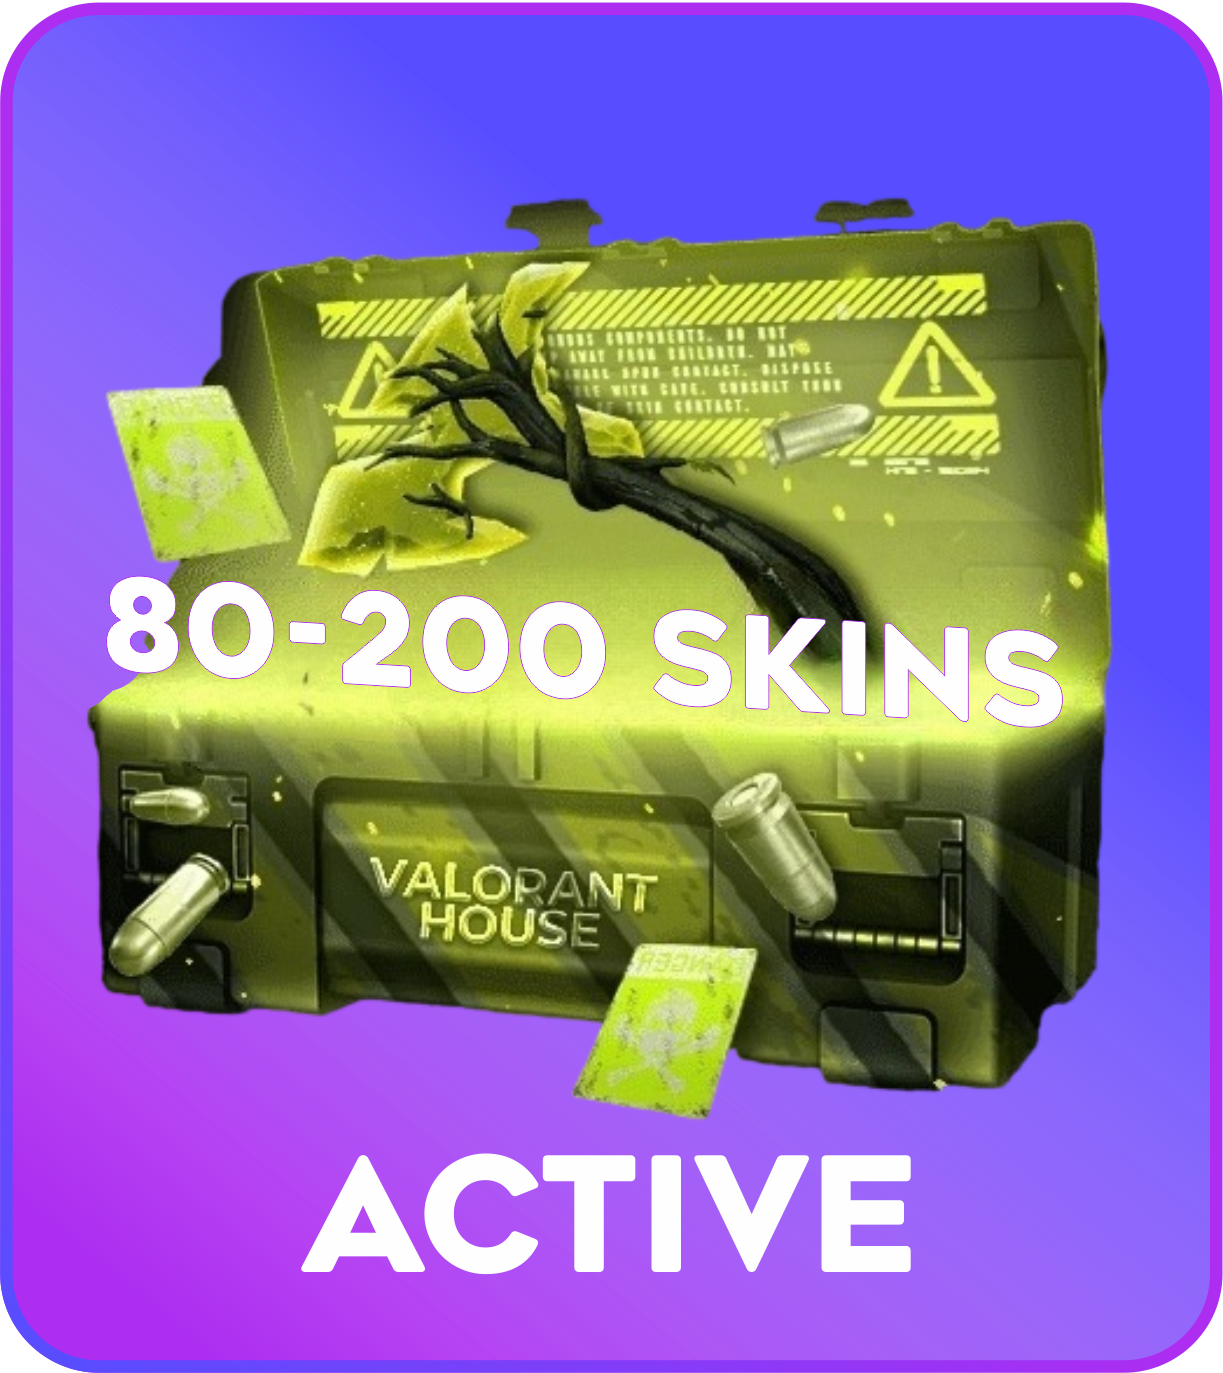 Active 80-200 skins Valorant Account 